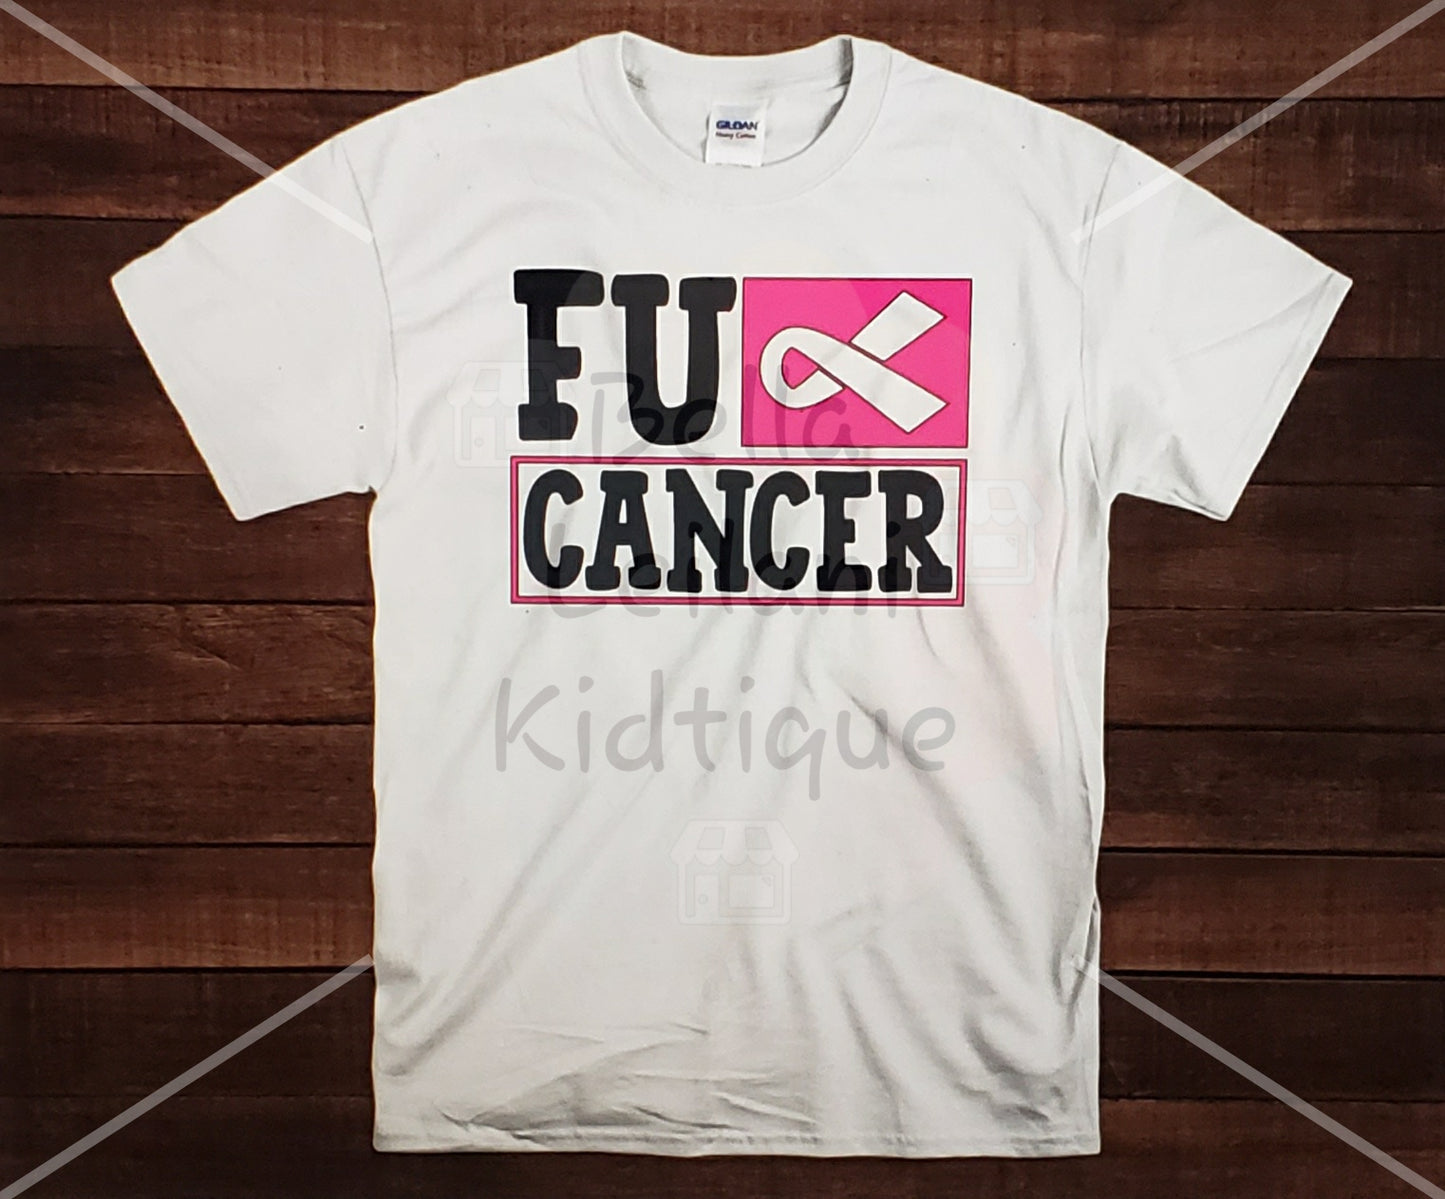 F Cancer